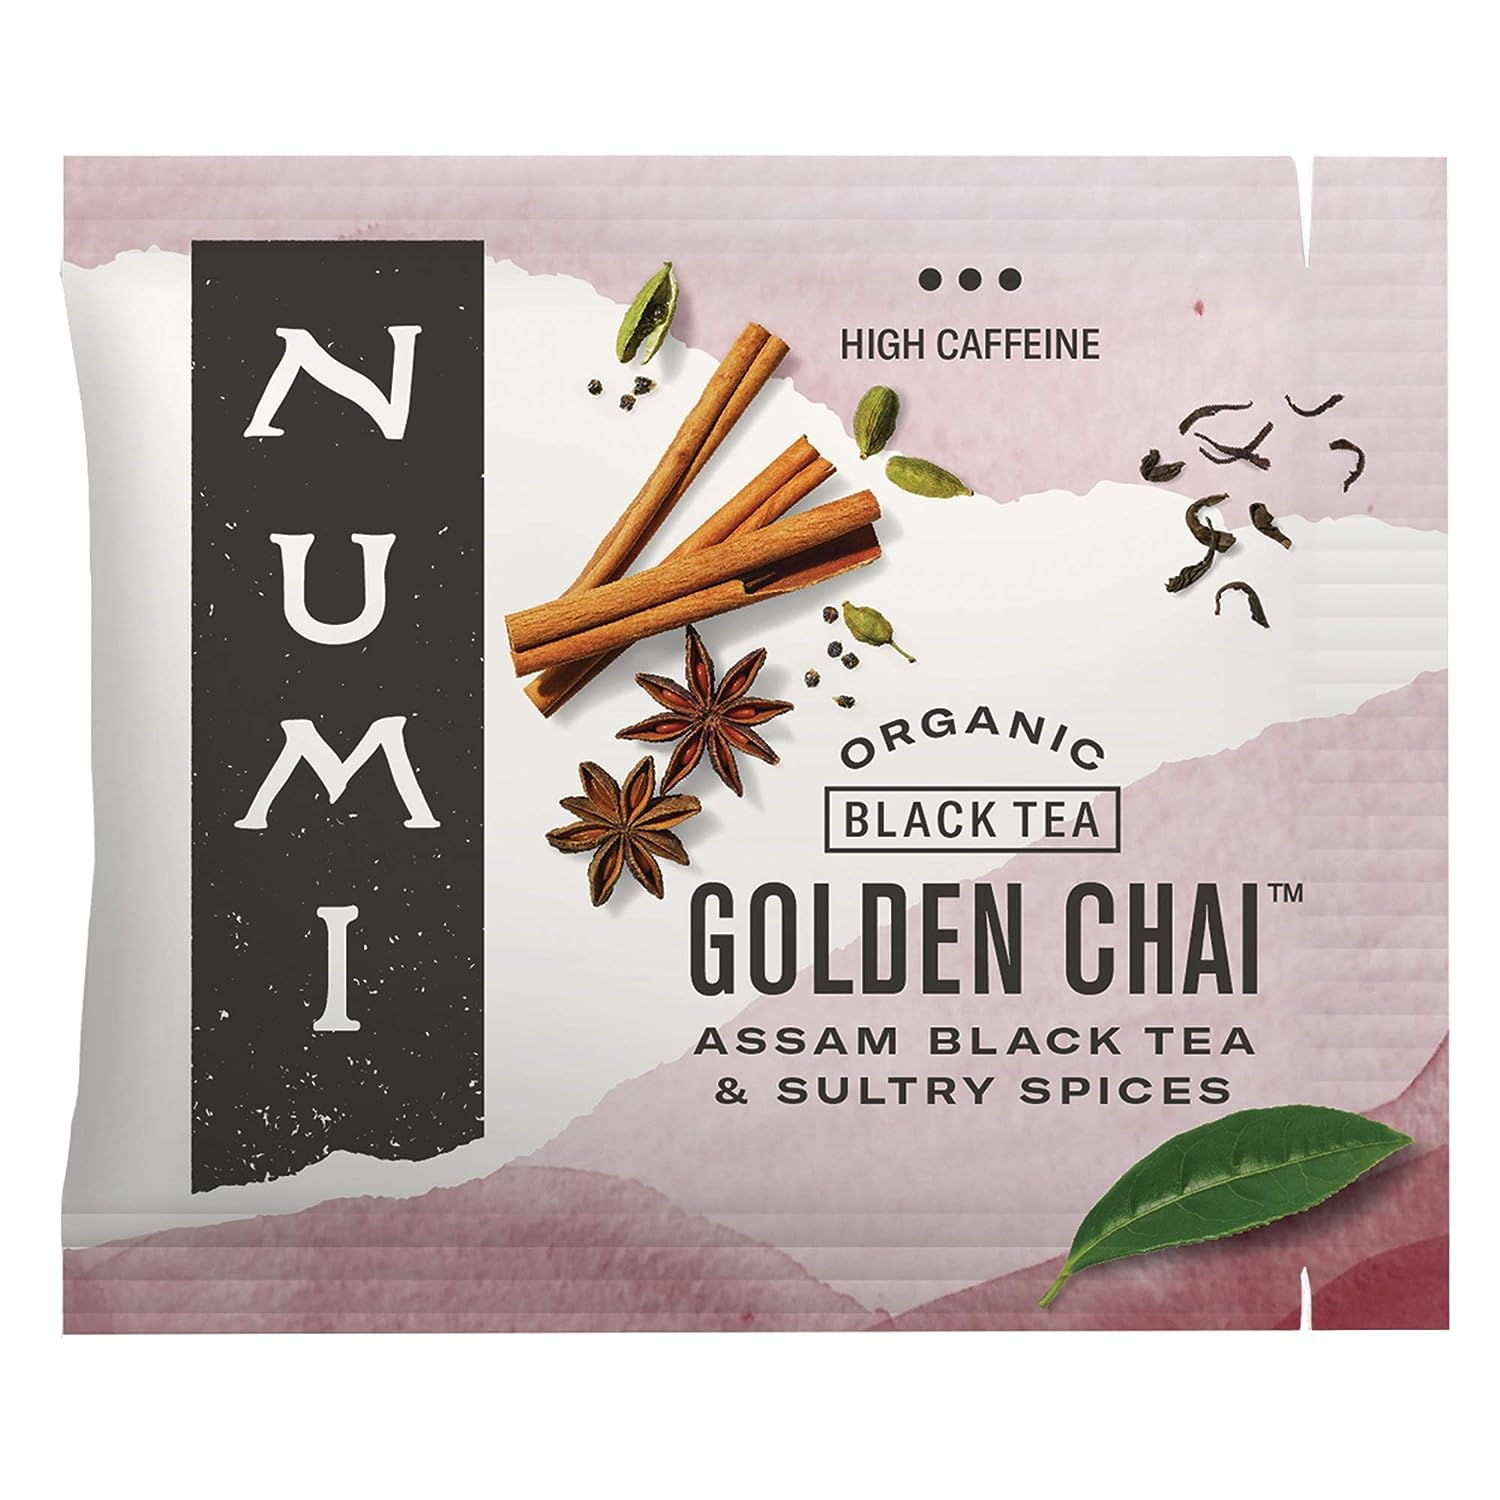 Numi Organic Tea Golden Chai, 100 Count Box of Tea Bags, Black Tea (Packaging May Vary)